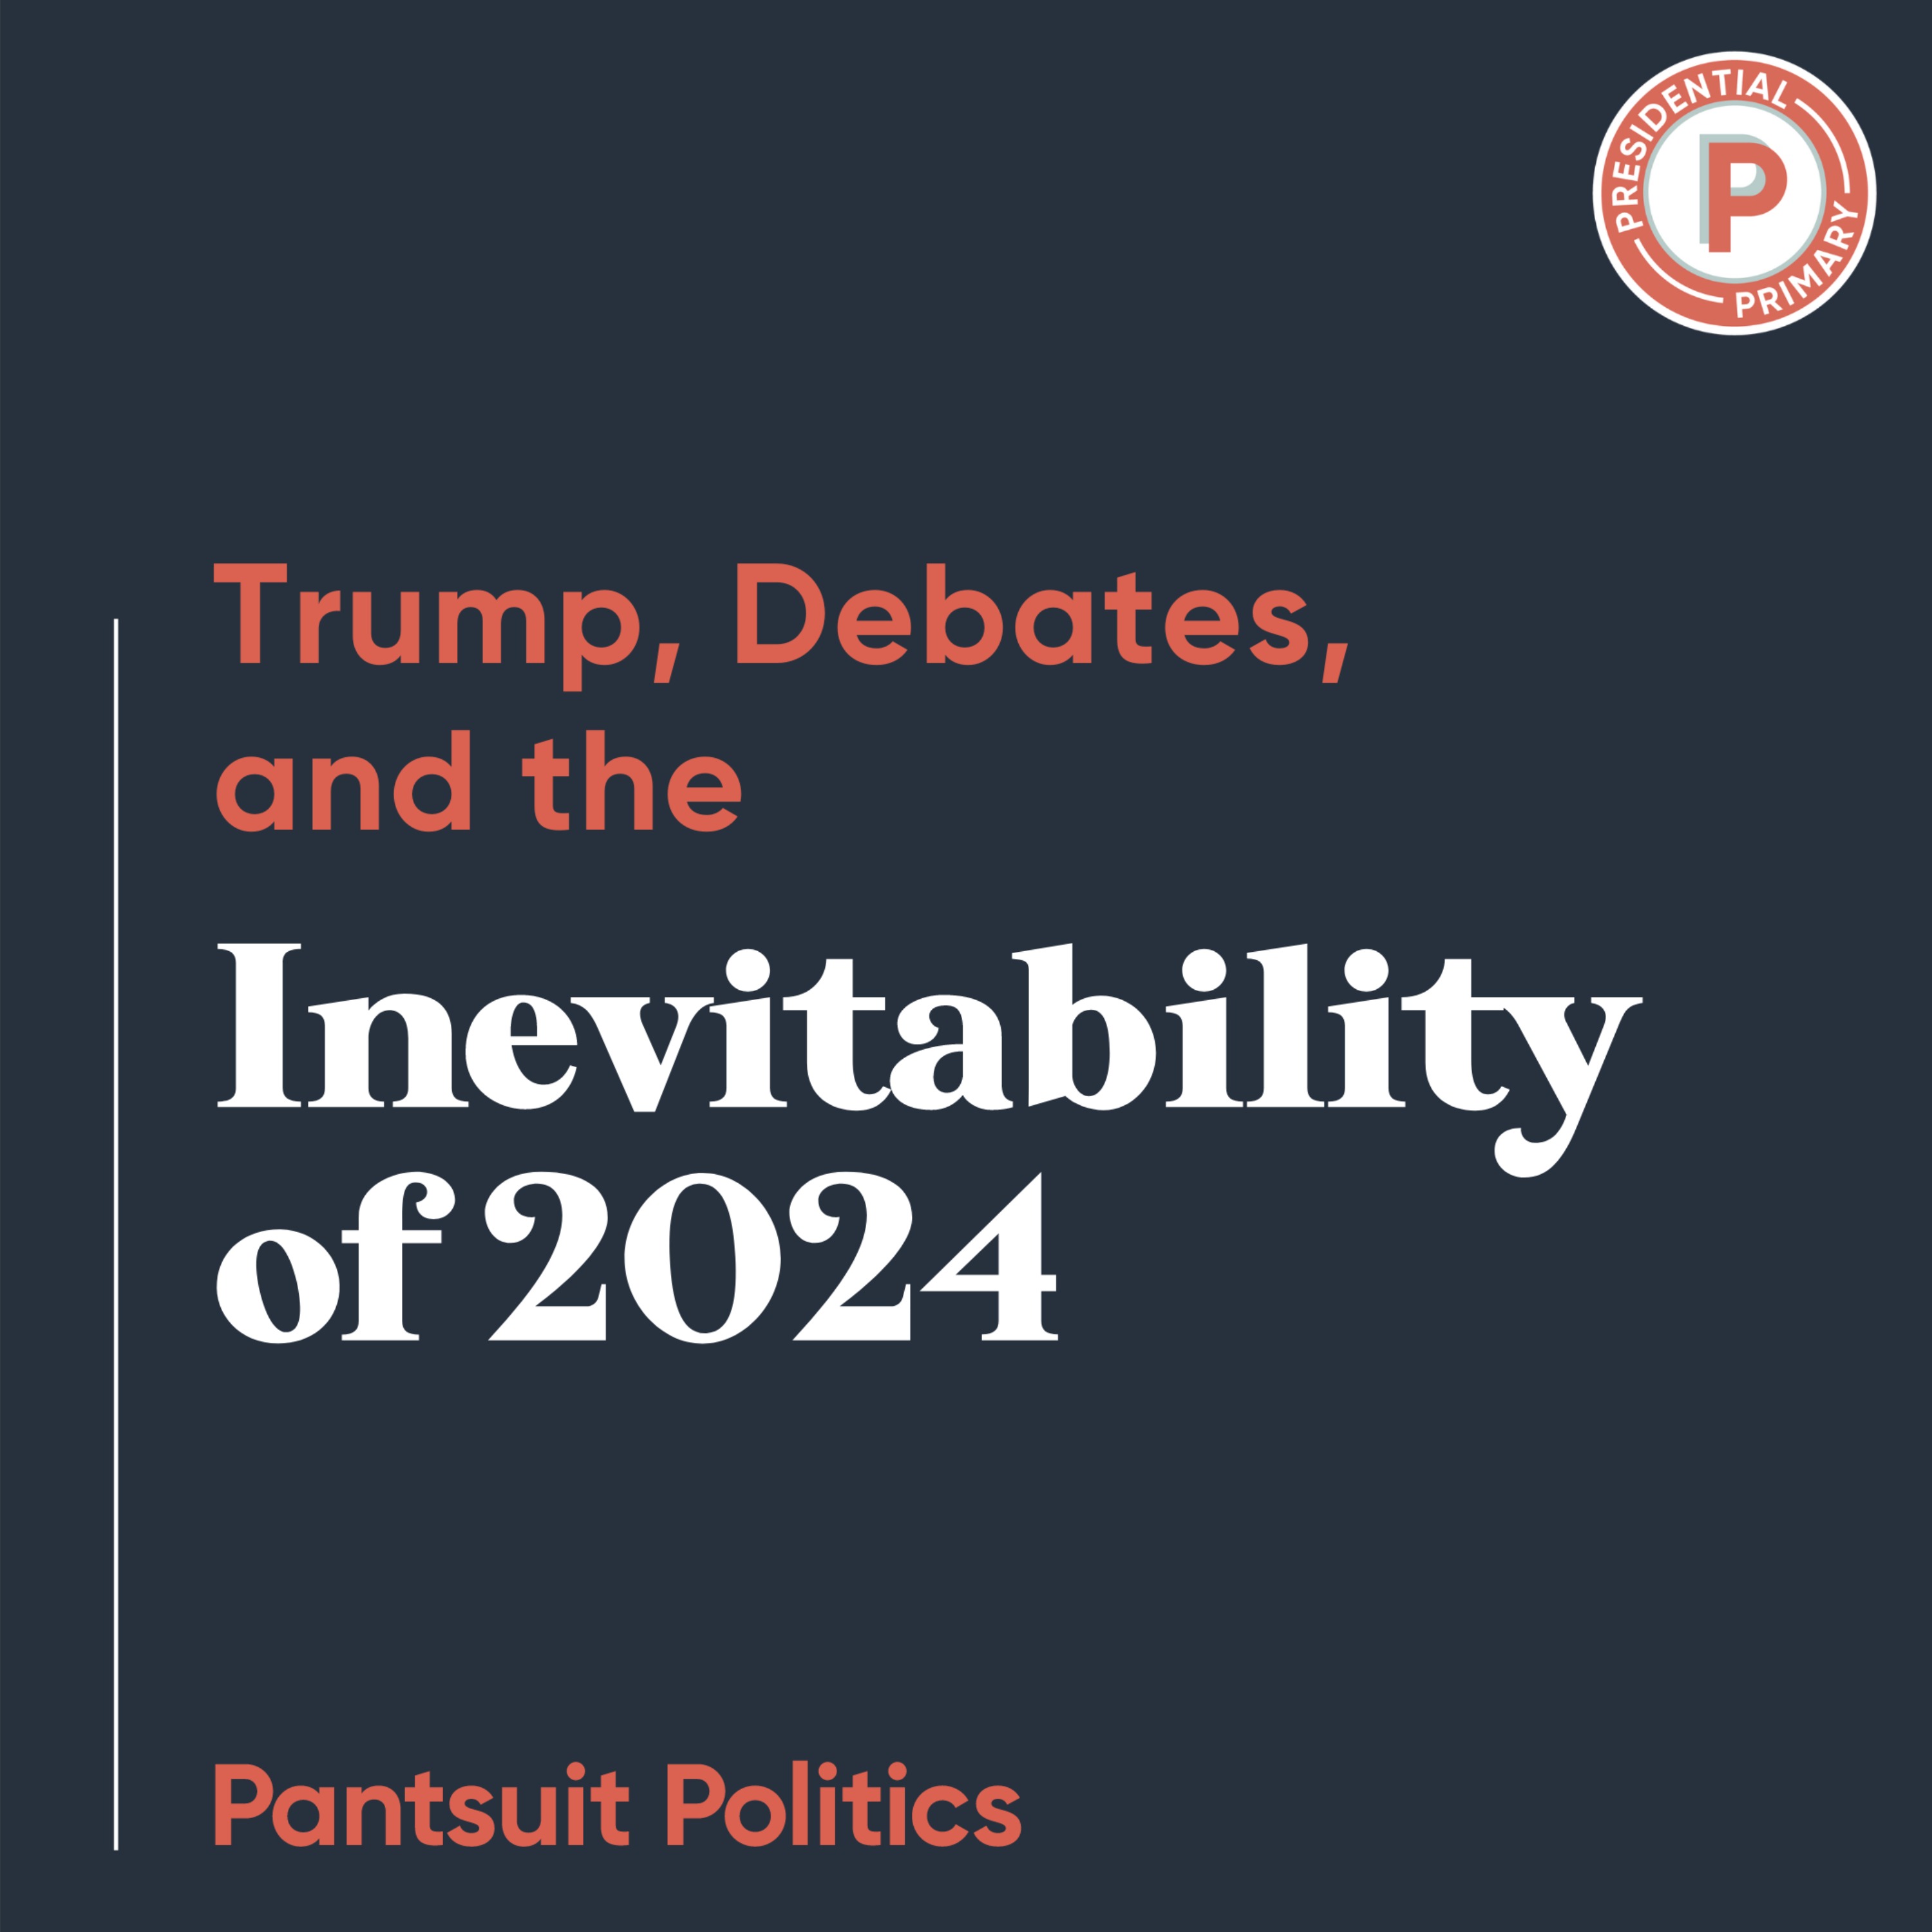 Trump, Debates, and the Inevitability of 2024